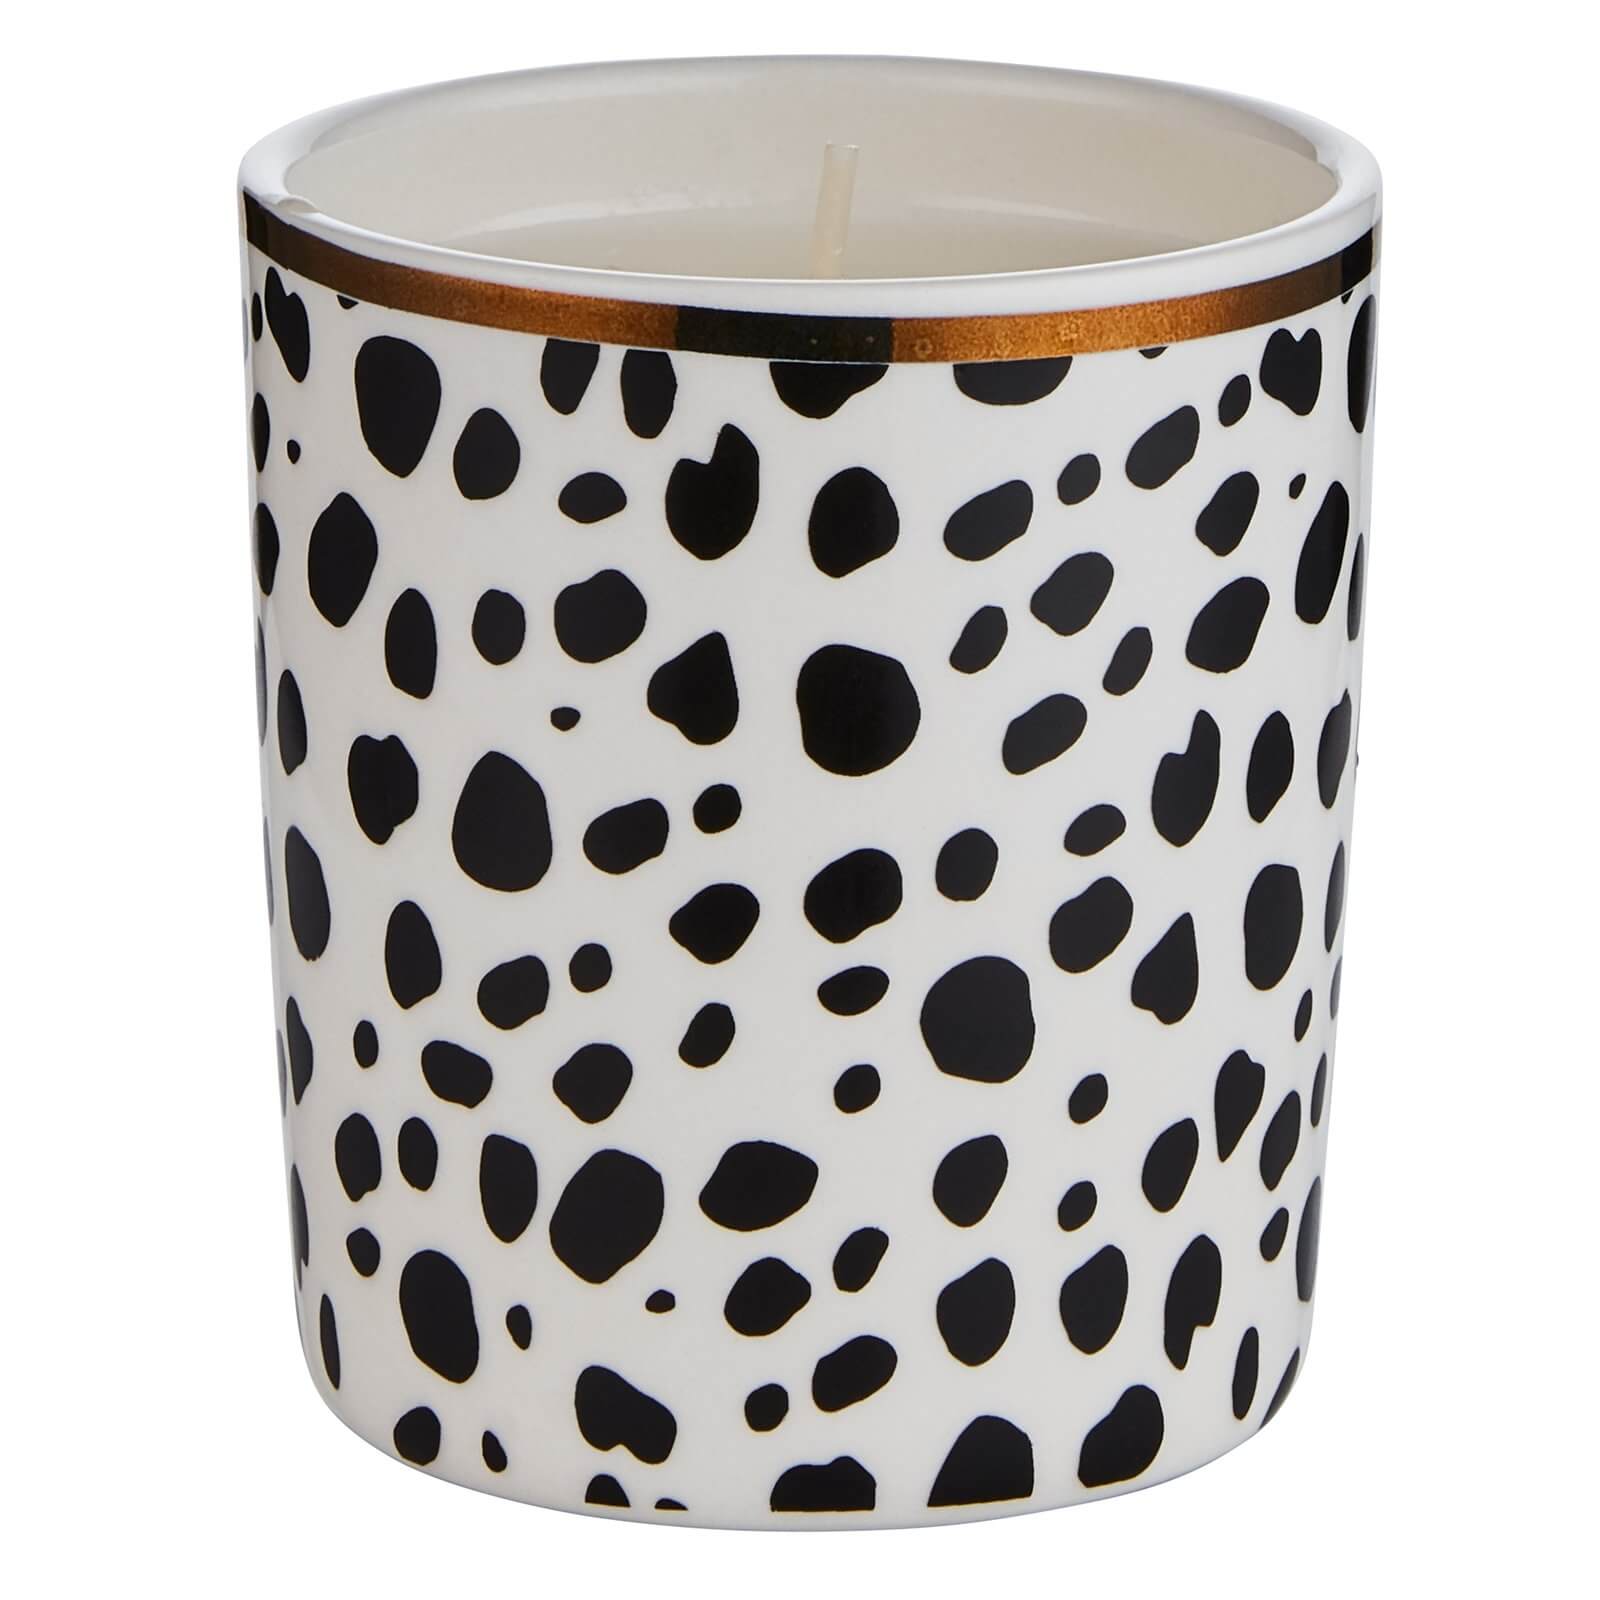 Dalmatian Ceramic Candle